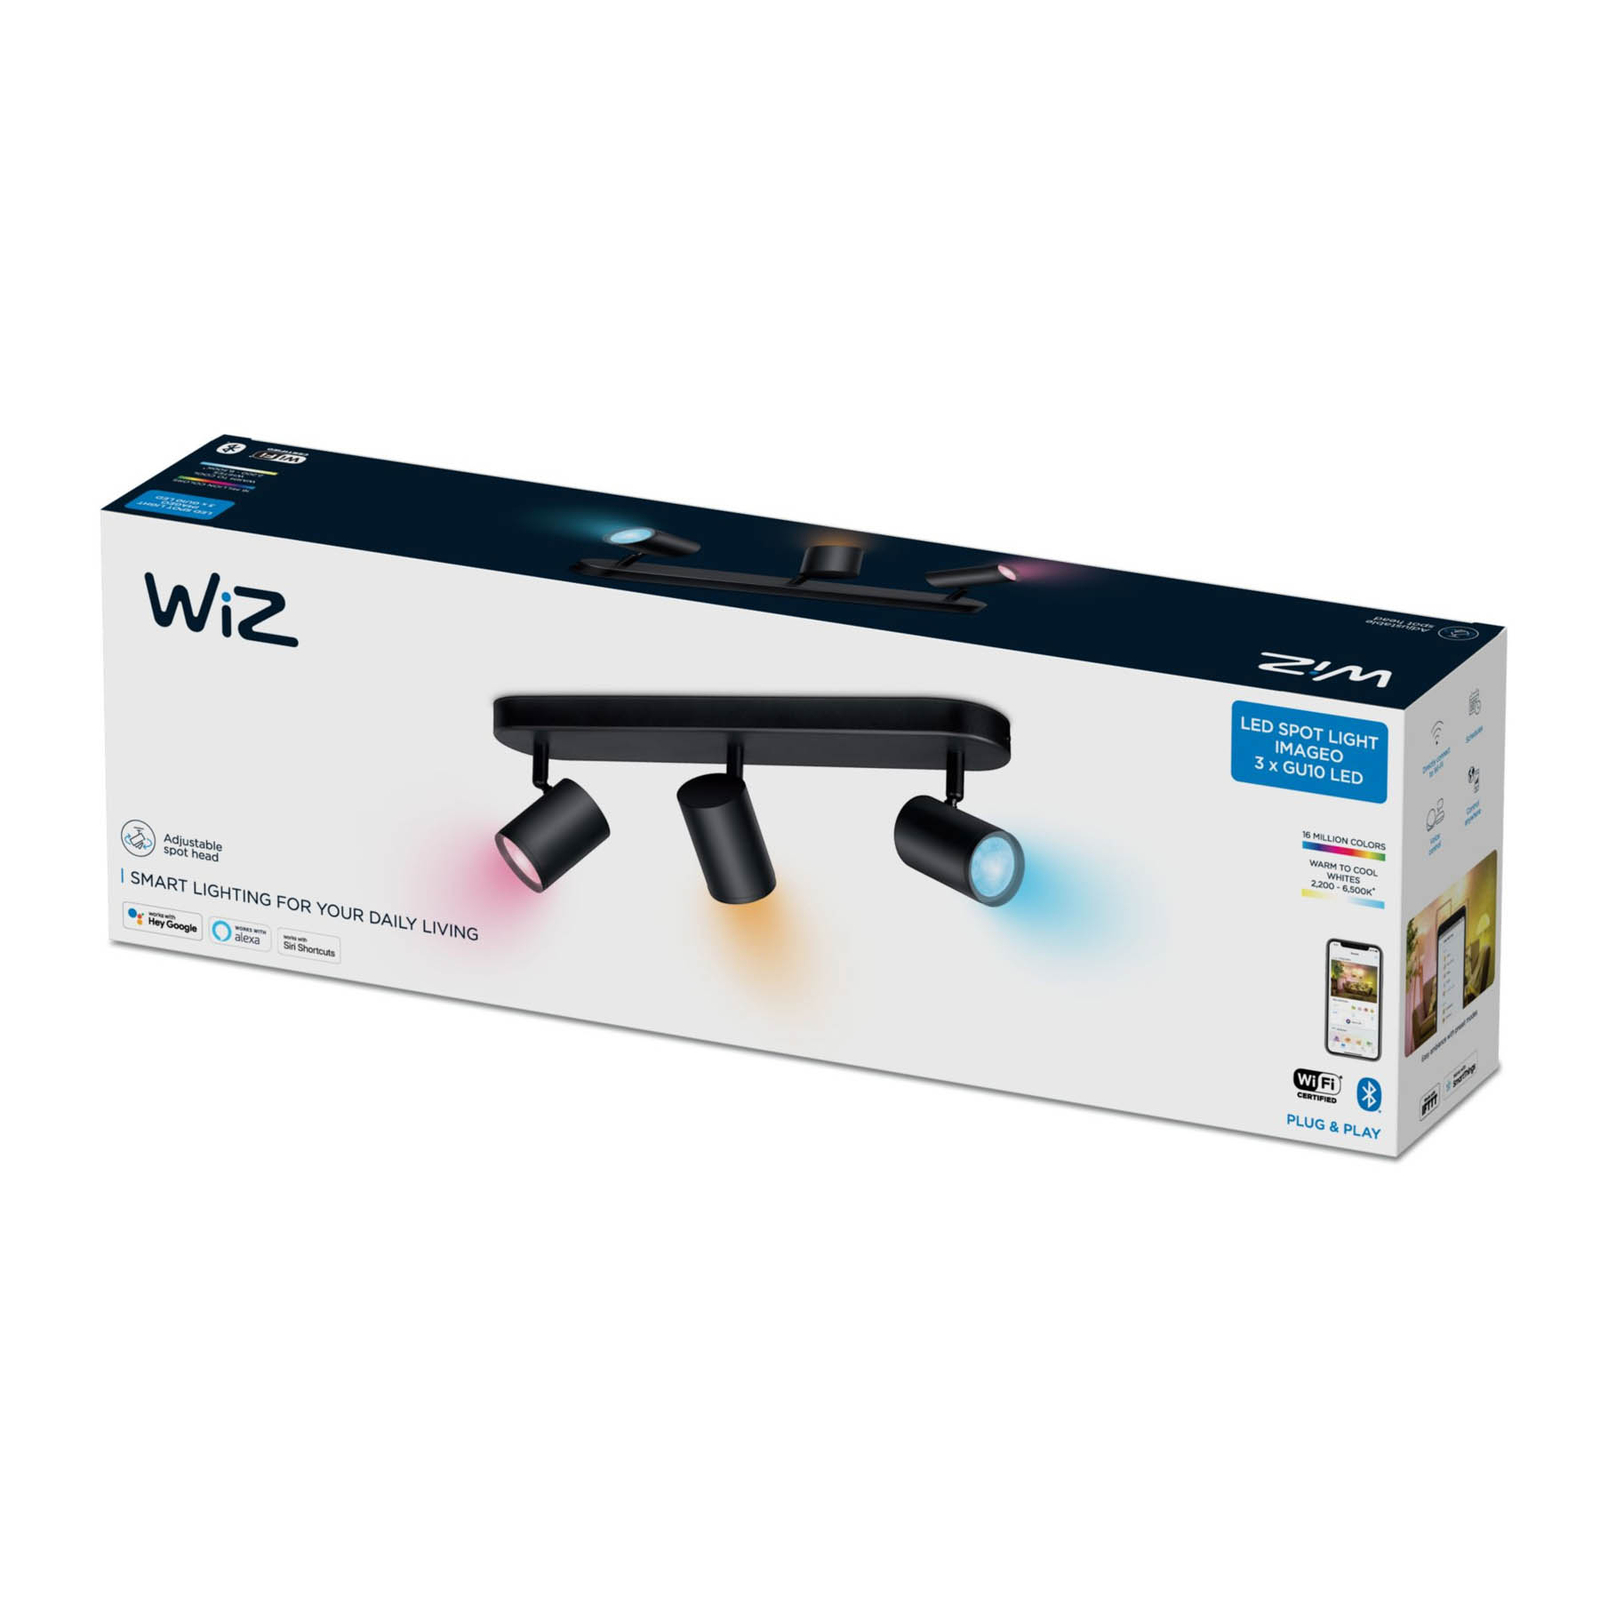 WiZ Imageo Faretto LED a 3 luci RGB, nero